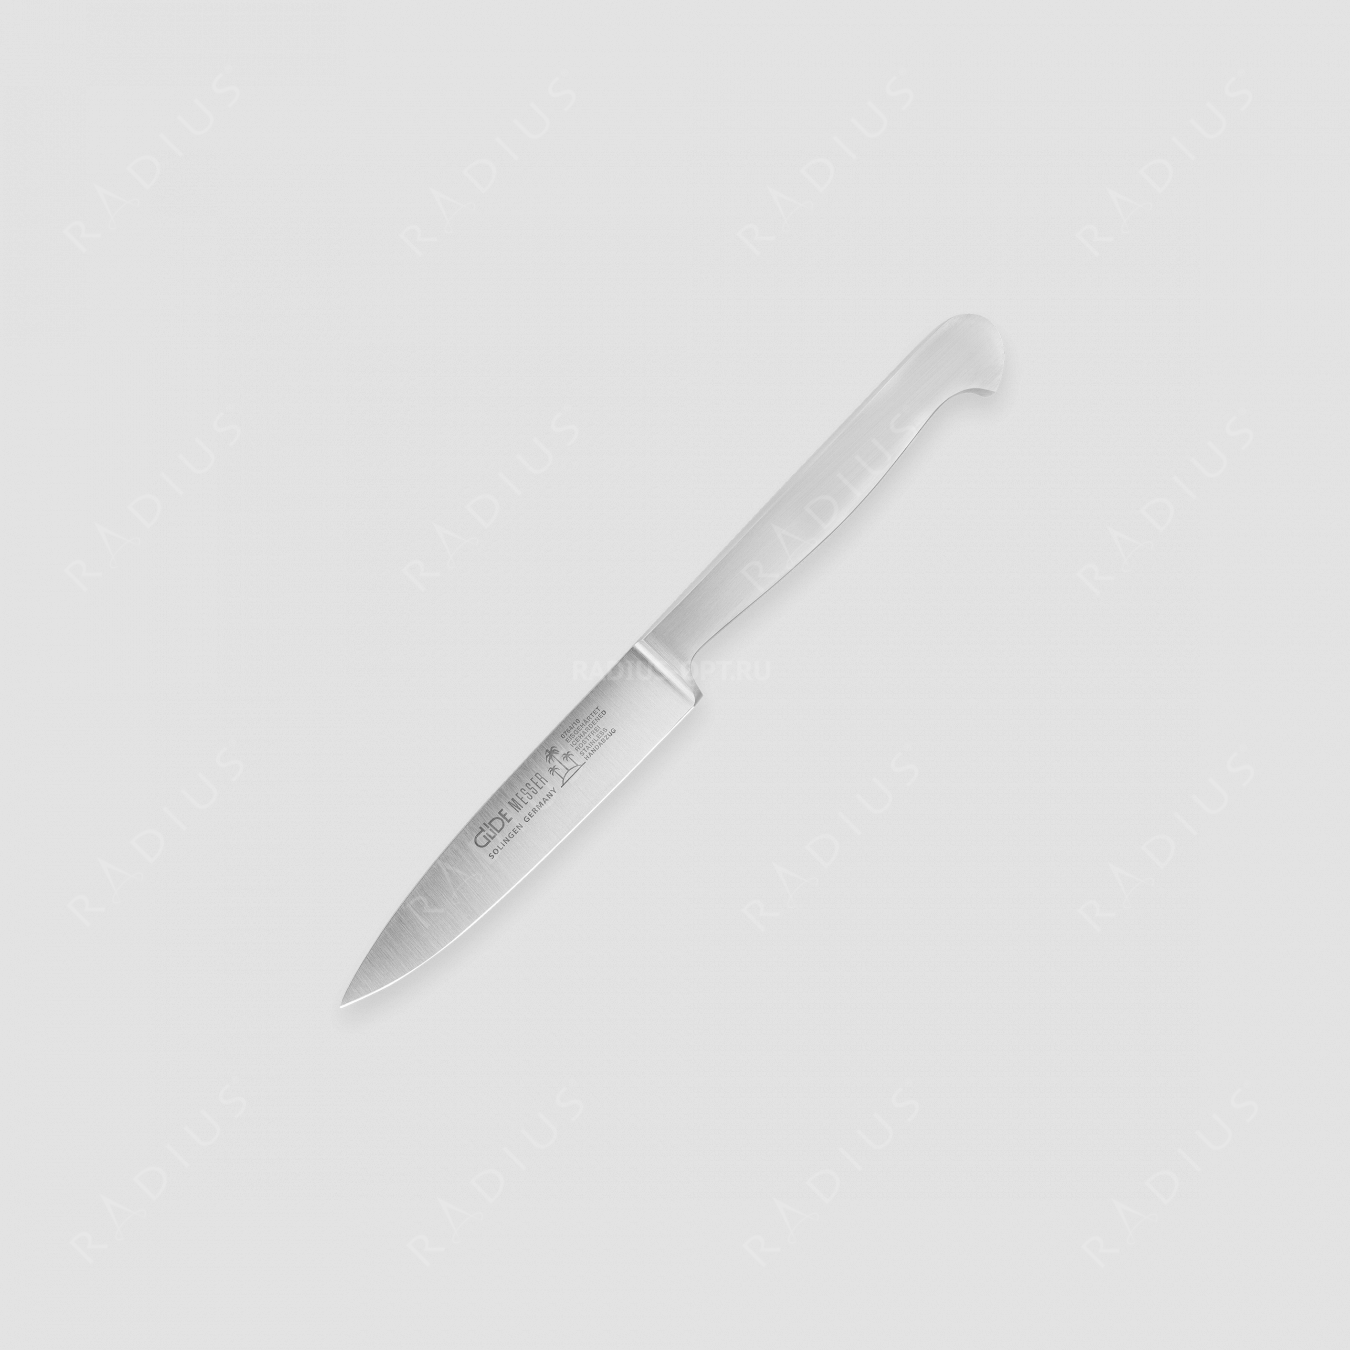 Нож для чистки 10 см, серия Kappa, GUDE, Золинген, Германия